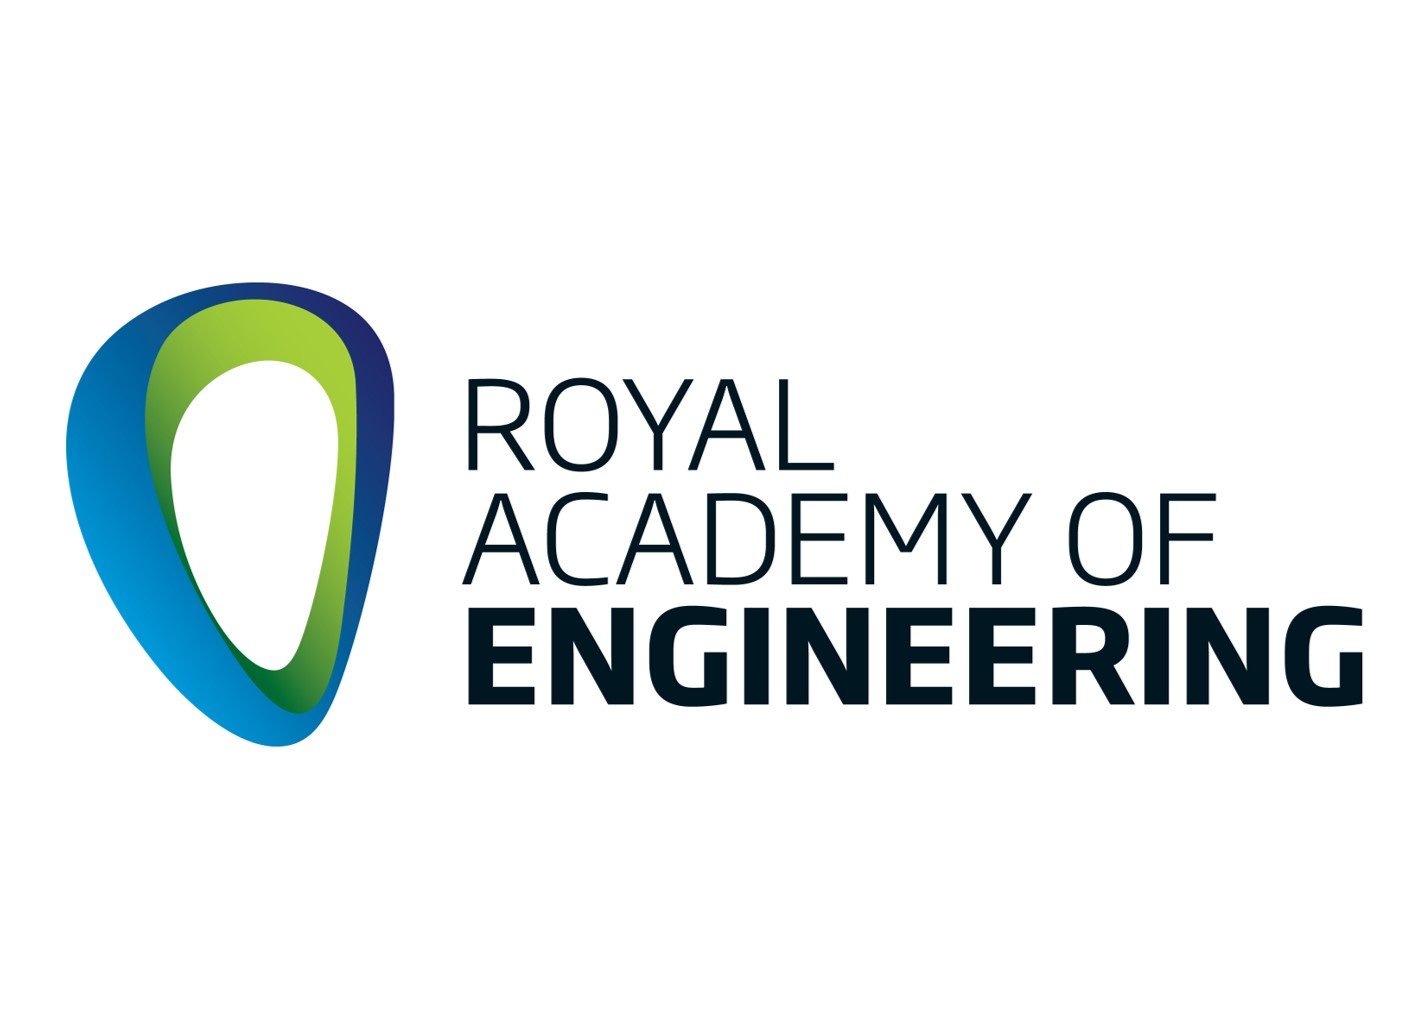 Royal Academy Of Engineering logo